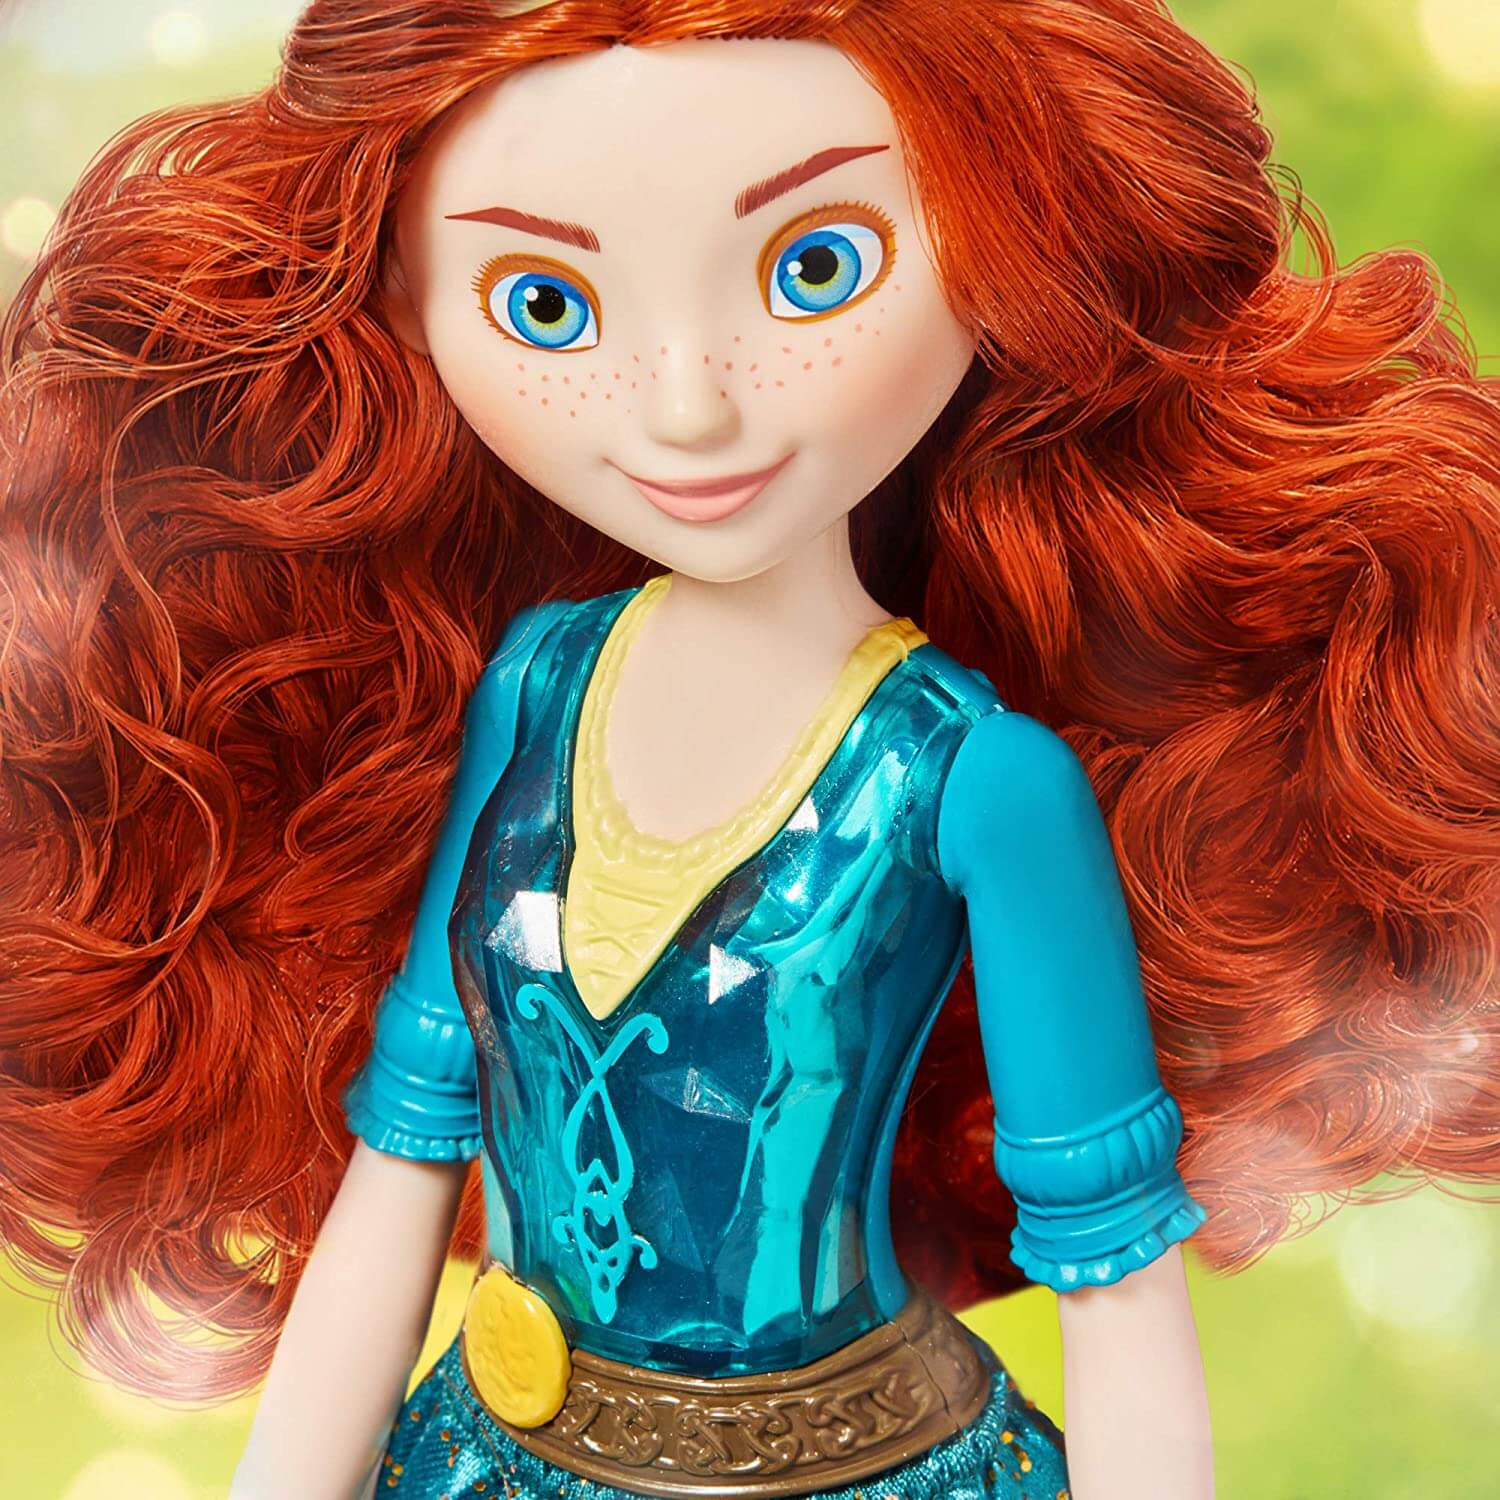 Hasbro Disney Princess Royal Shimmer Merida Doll